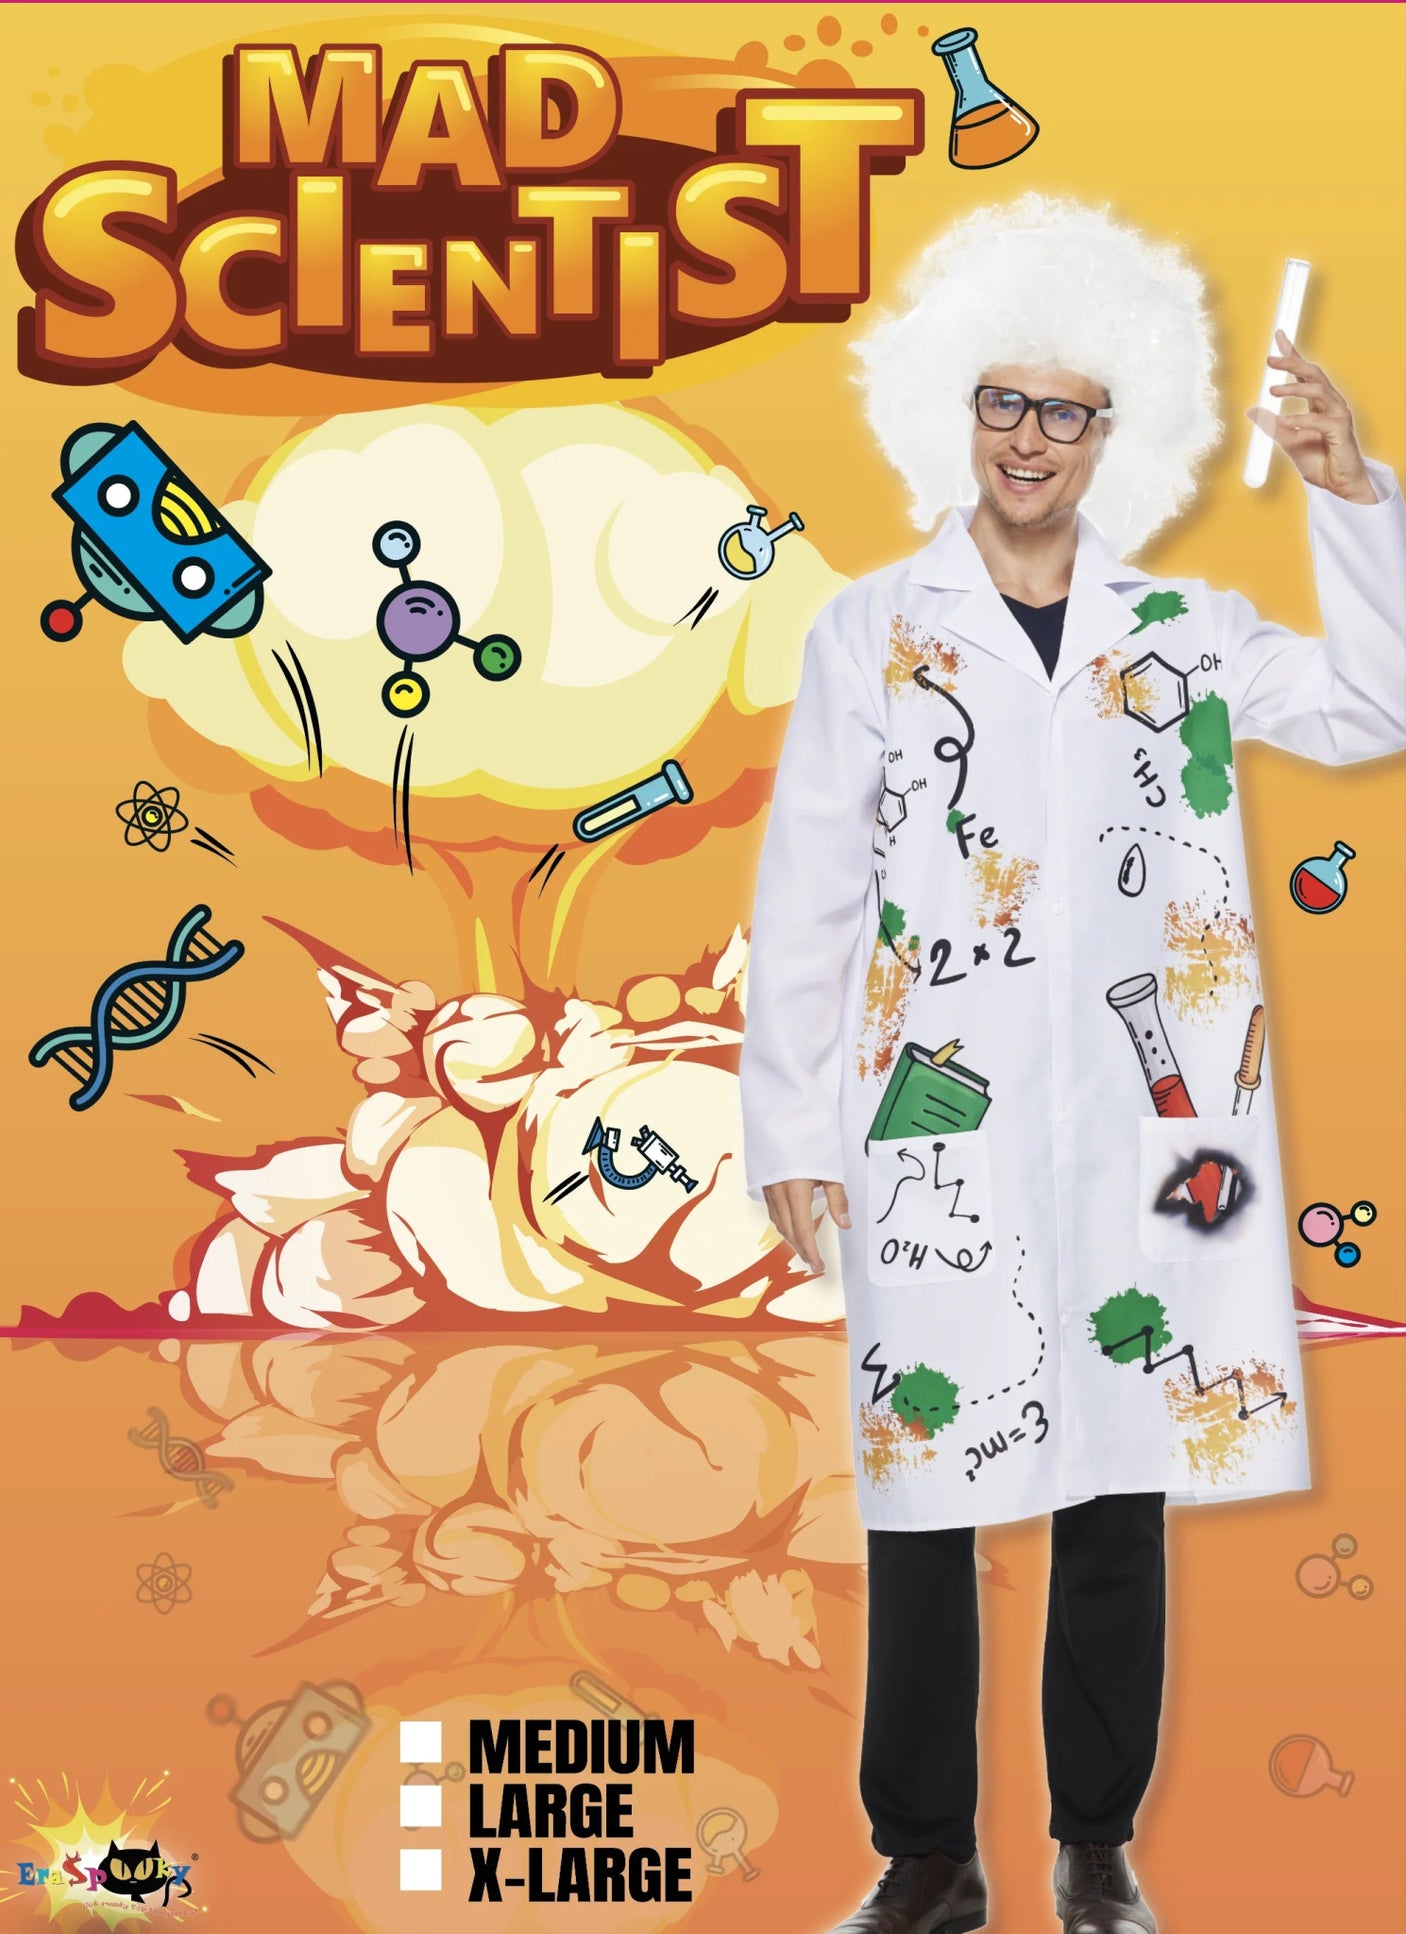 Mad Scientist Costume - Random Galaxy